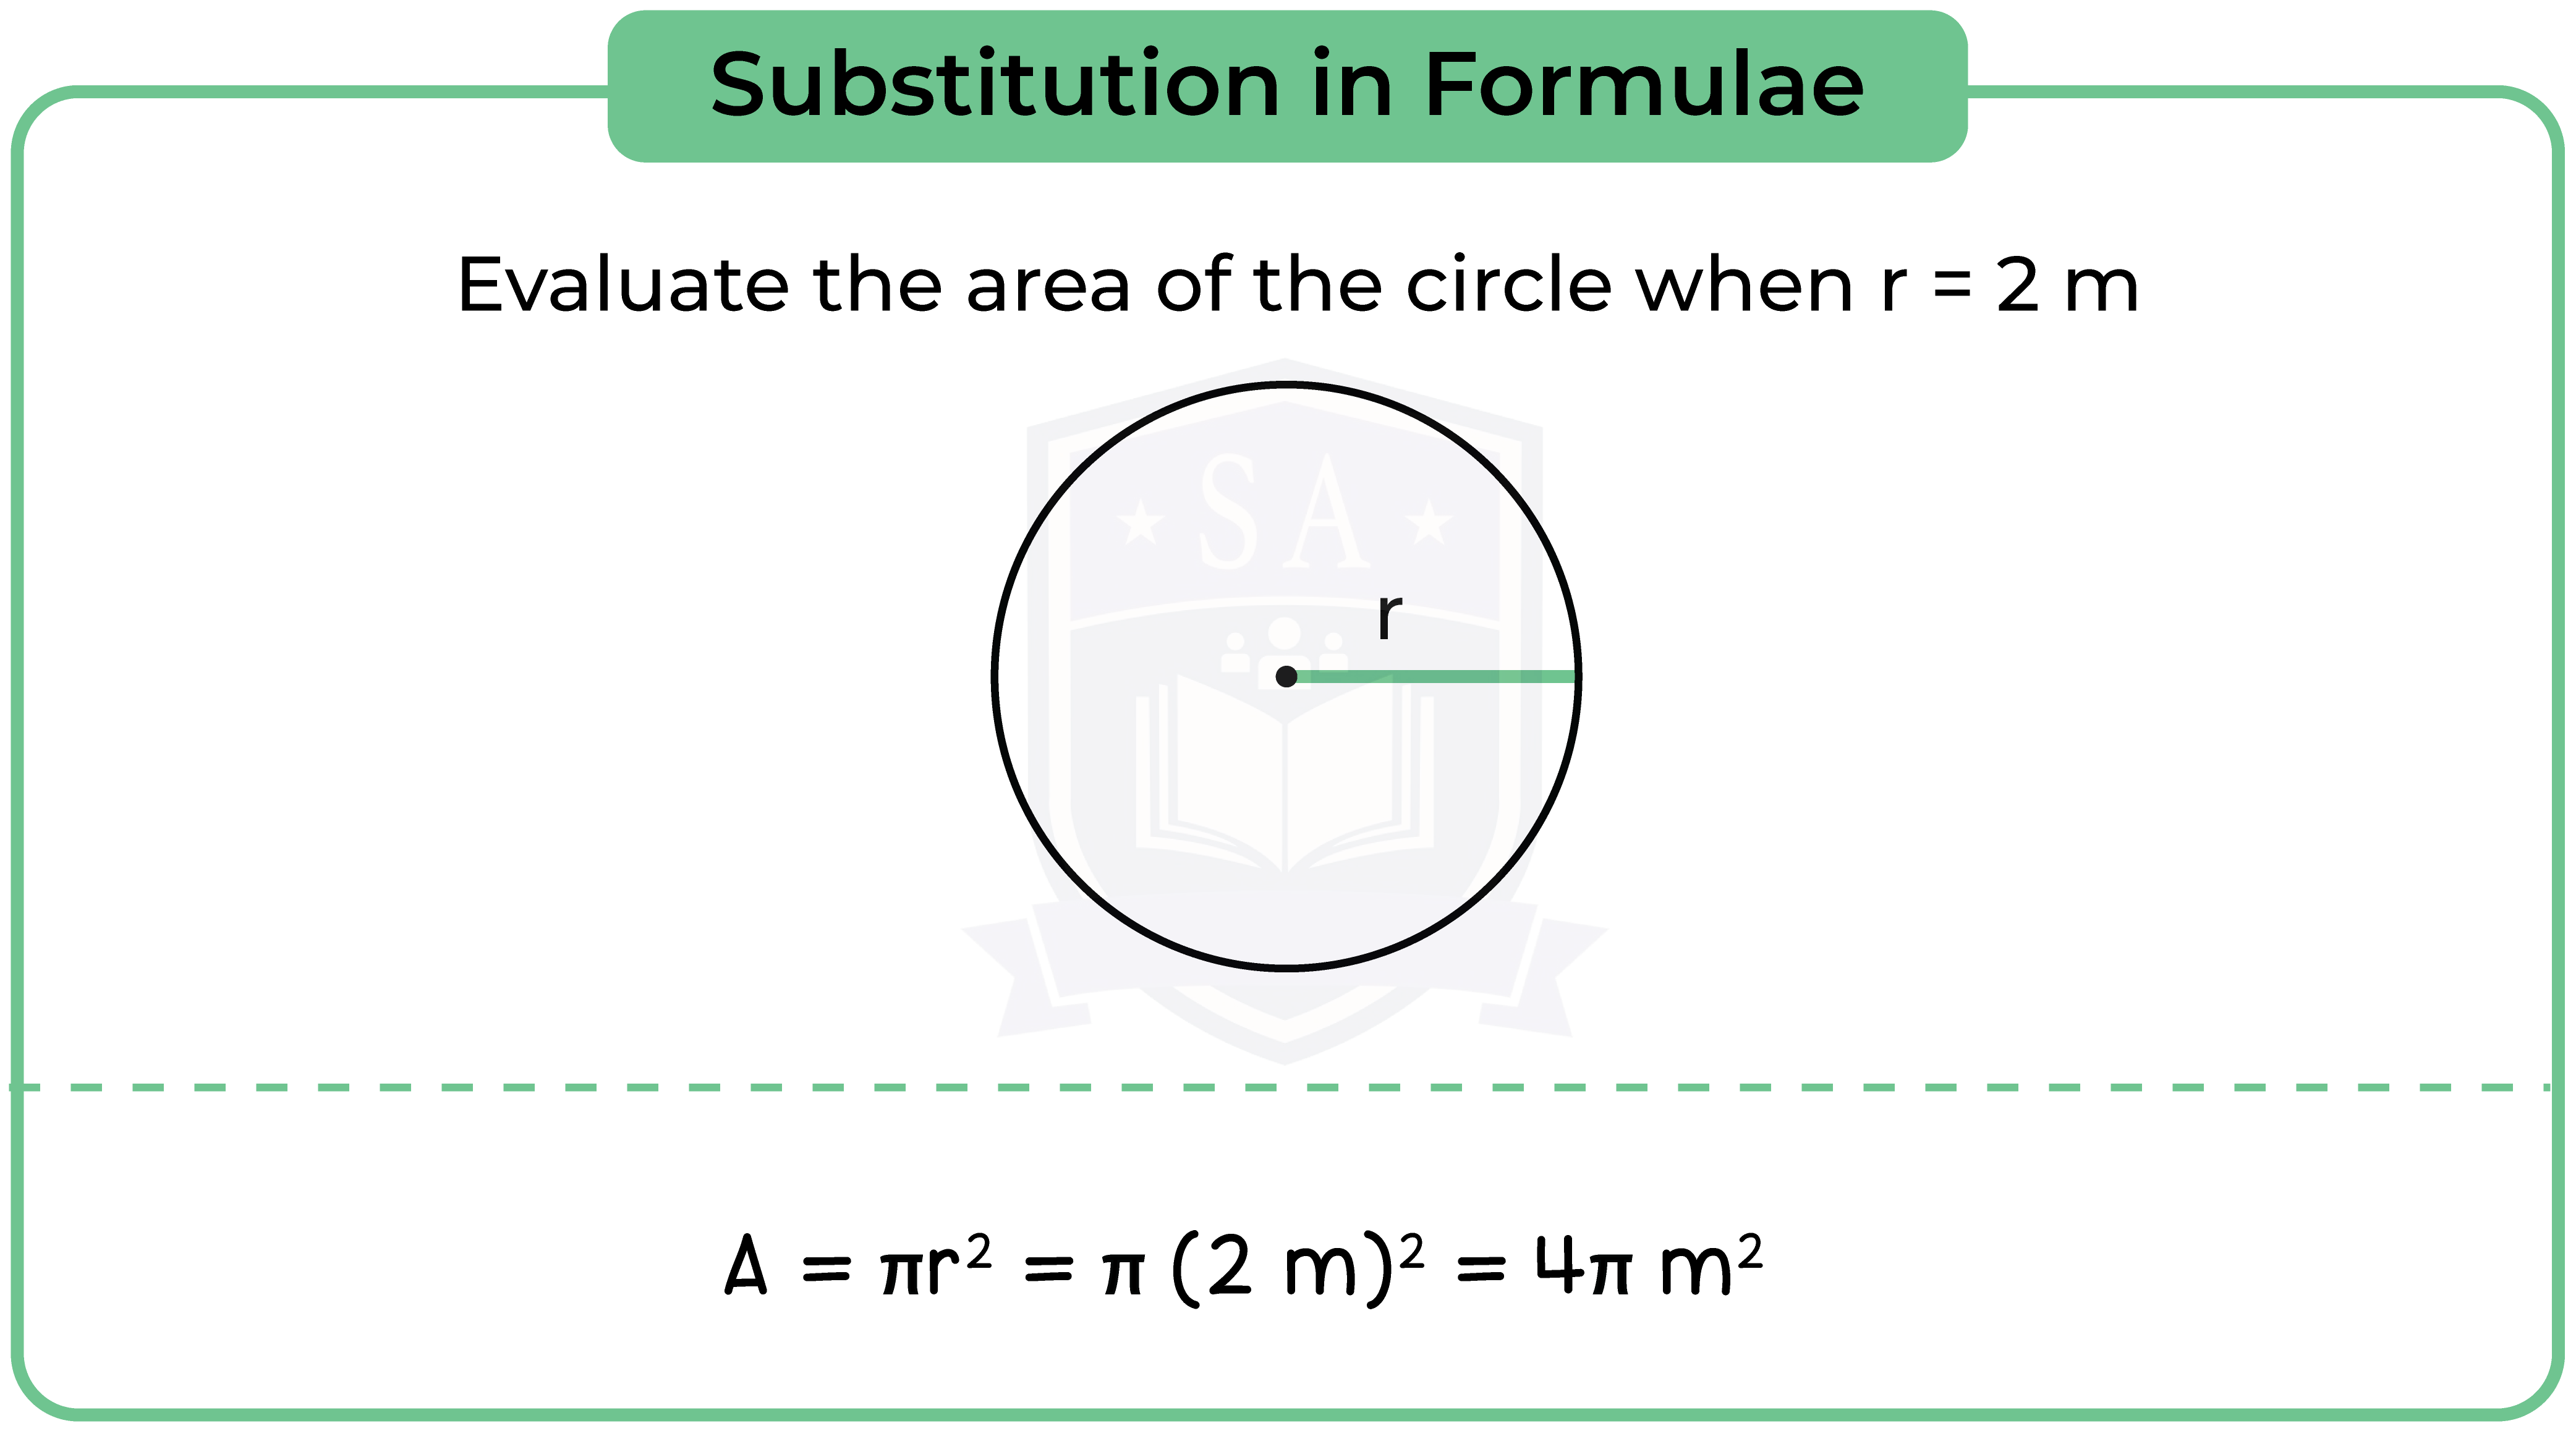 edexcel_igcse_mathematics a_topic 14_expressions and formulae_003_Subtitution in Formulae